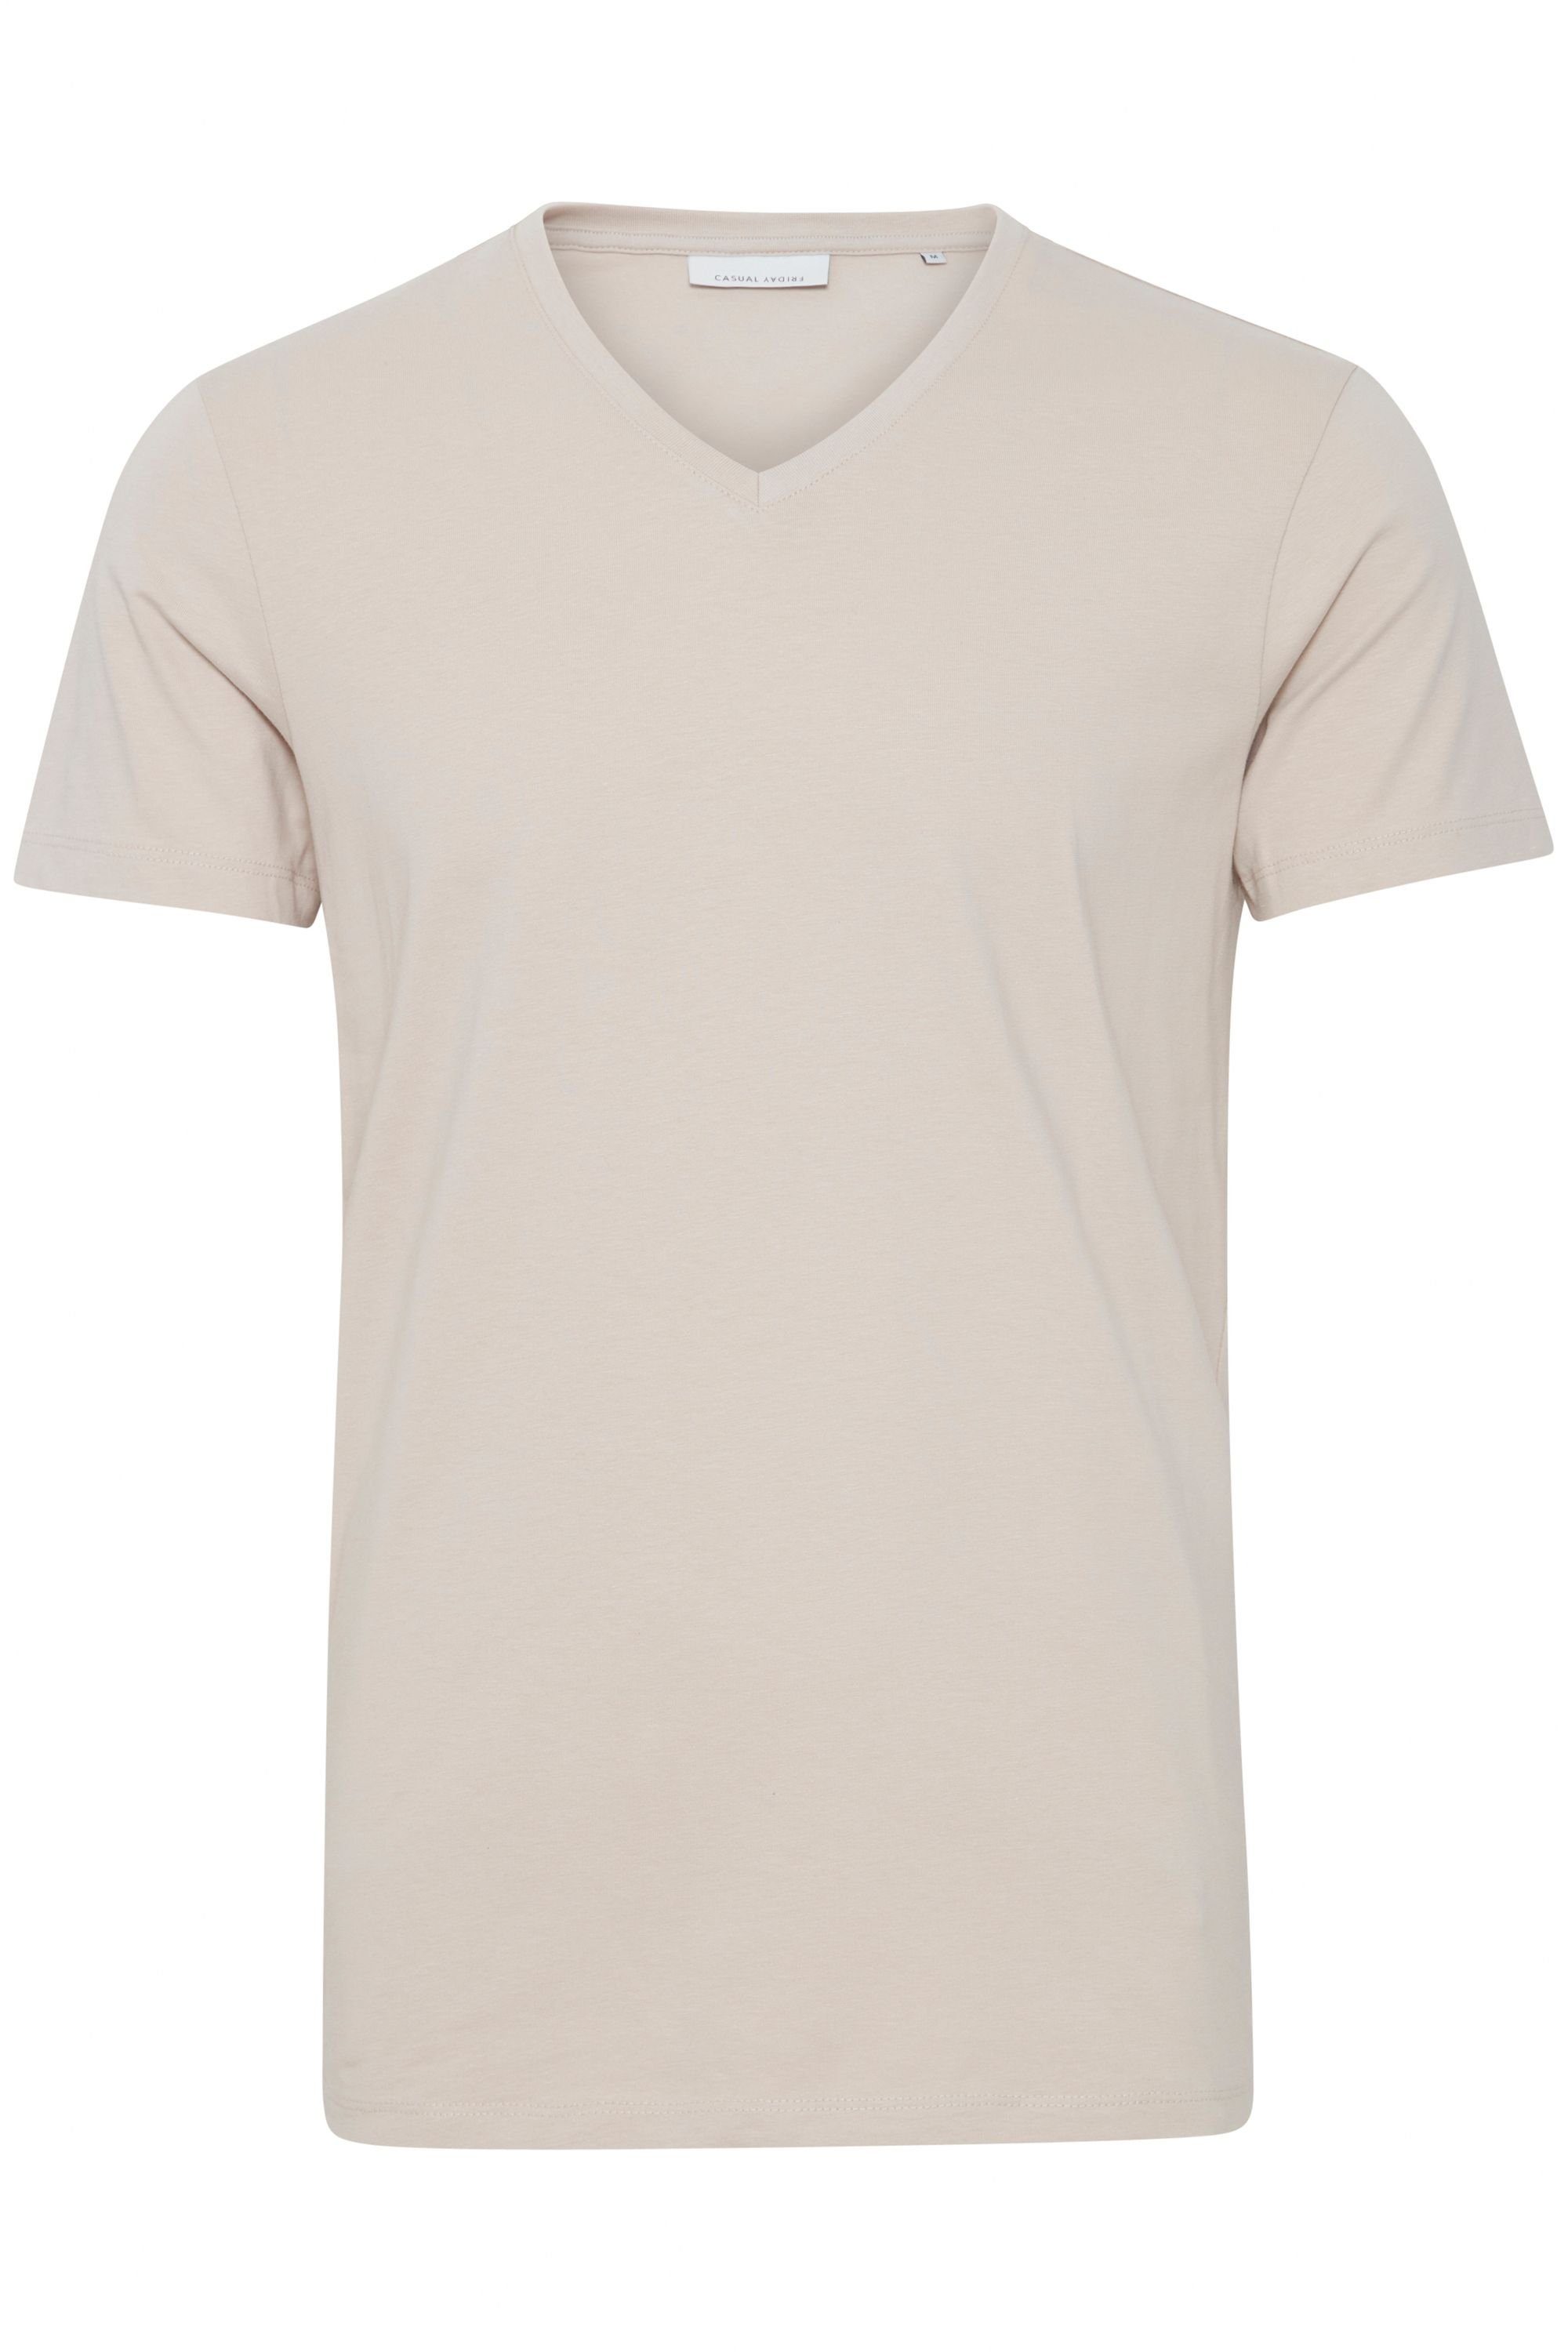 Casual Friday T-Shirt (154503) 20503062 - Chateau CFLincoln Gray